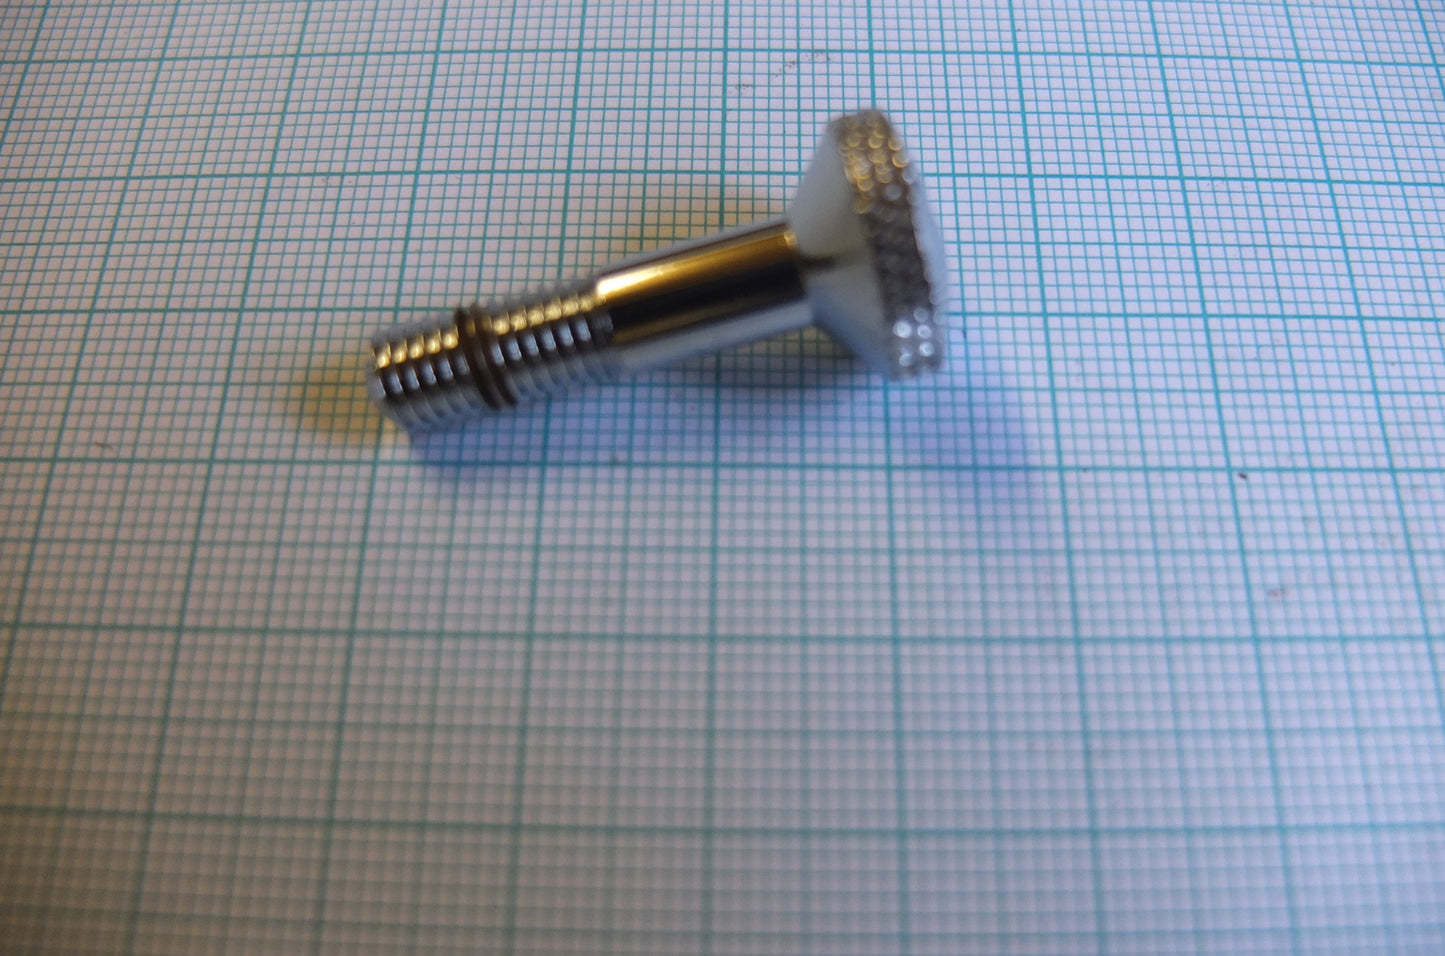 P3/011 Control Box lid screw